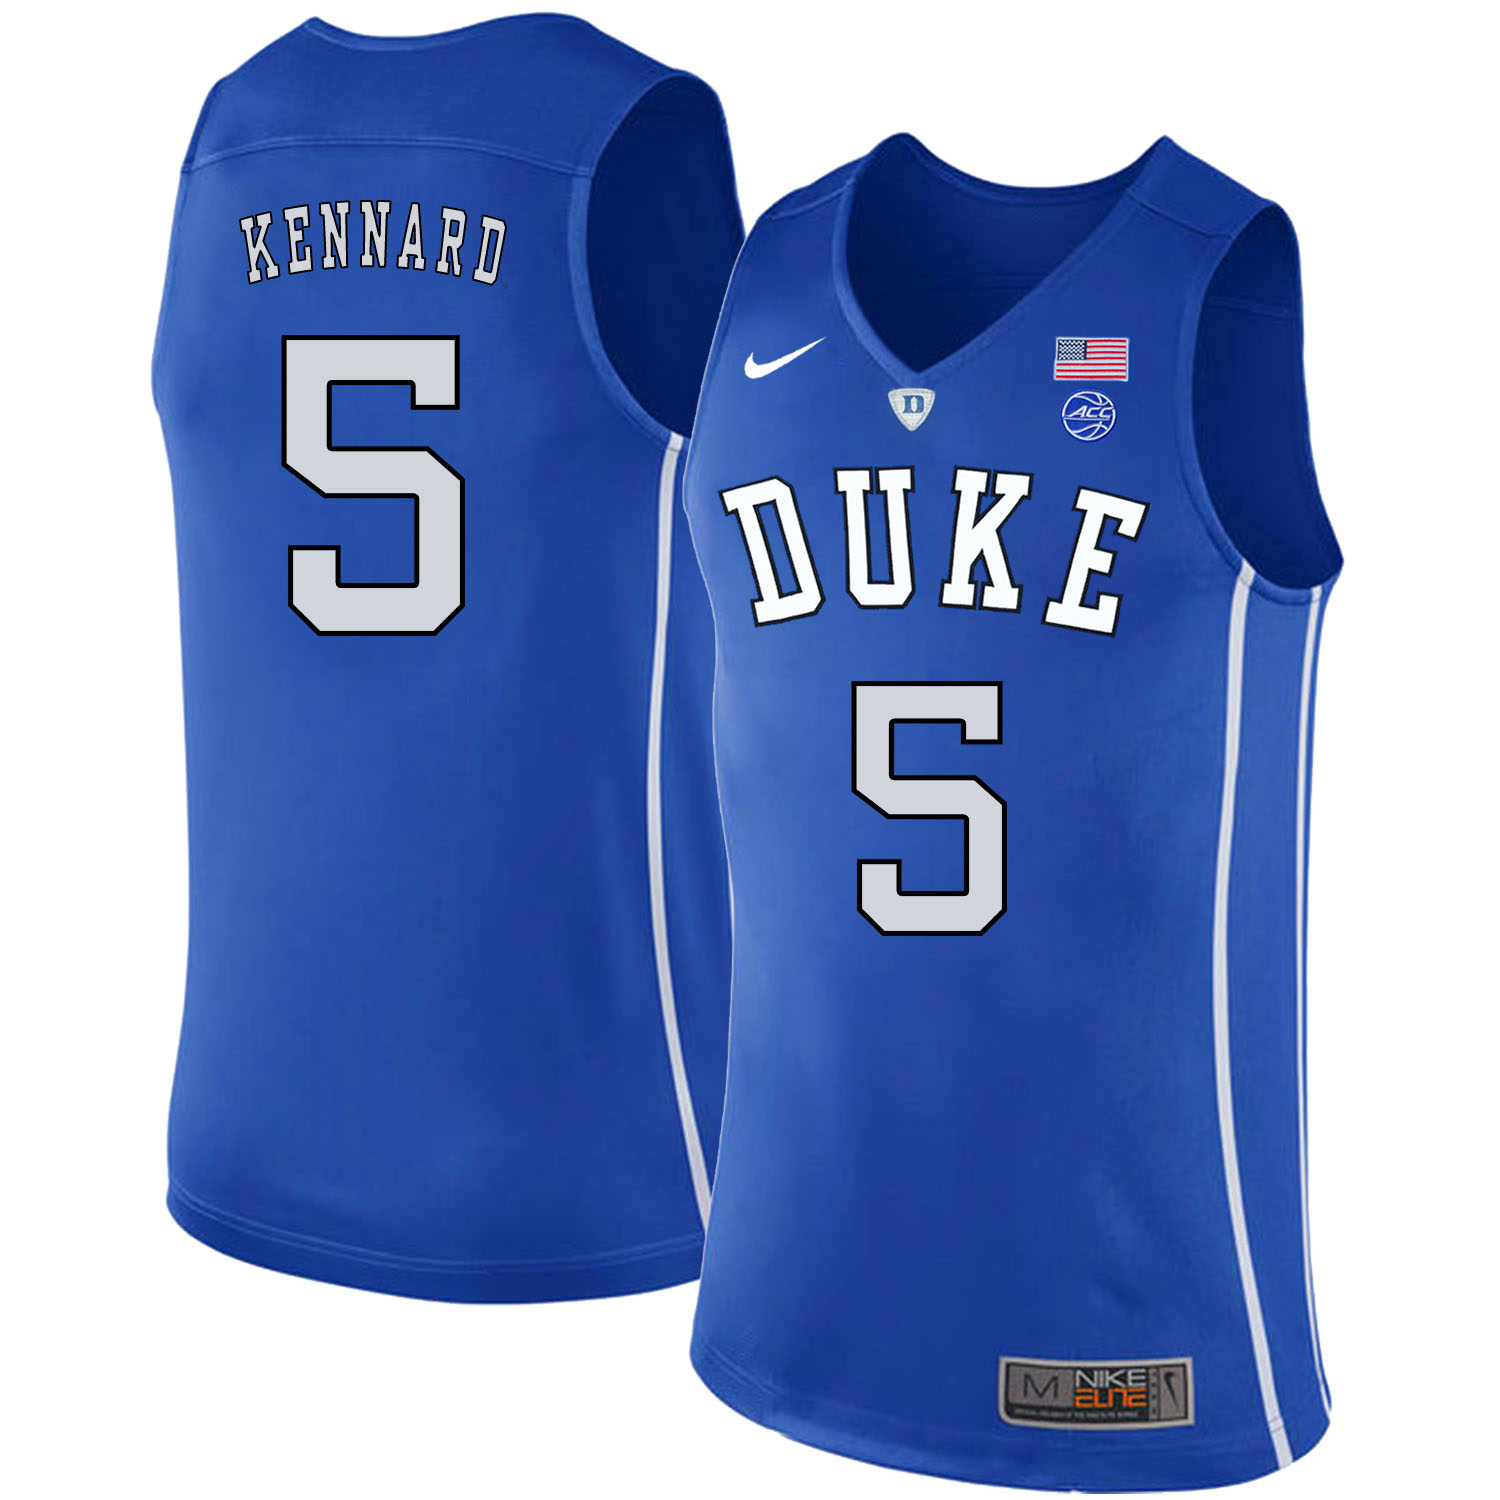 Duke Blue Devils 5 Luke Kennard Blue Nike College Basketball Jersey